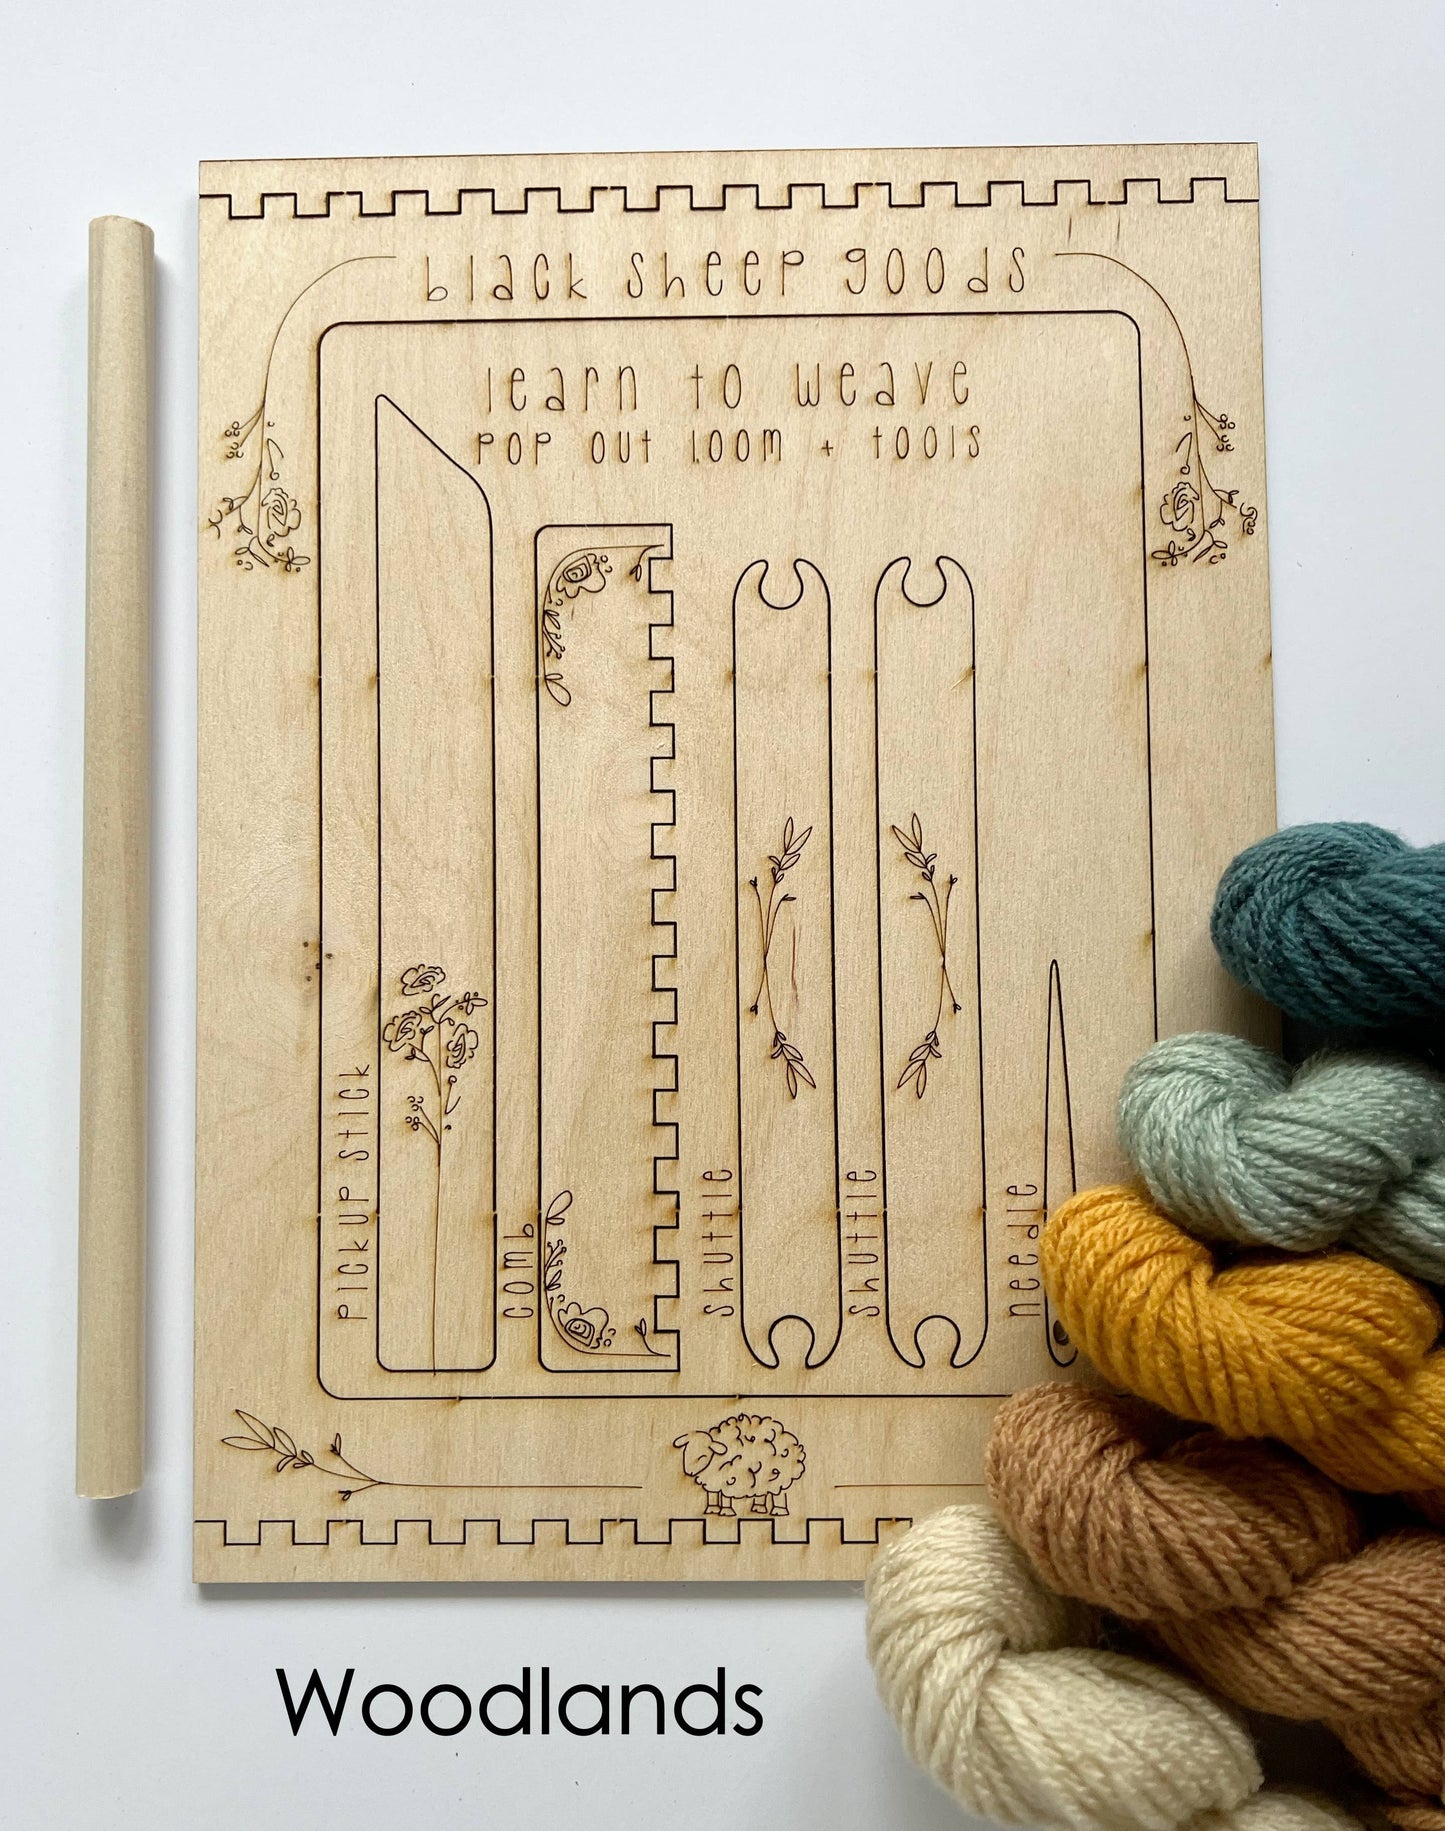 DIY Tapestry Weaving Kits